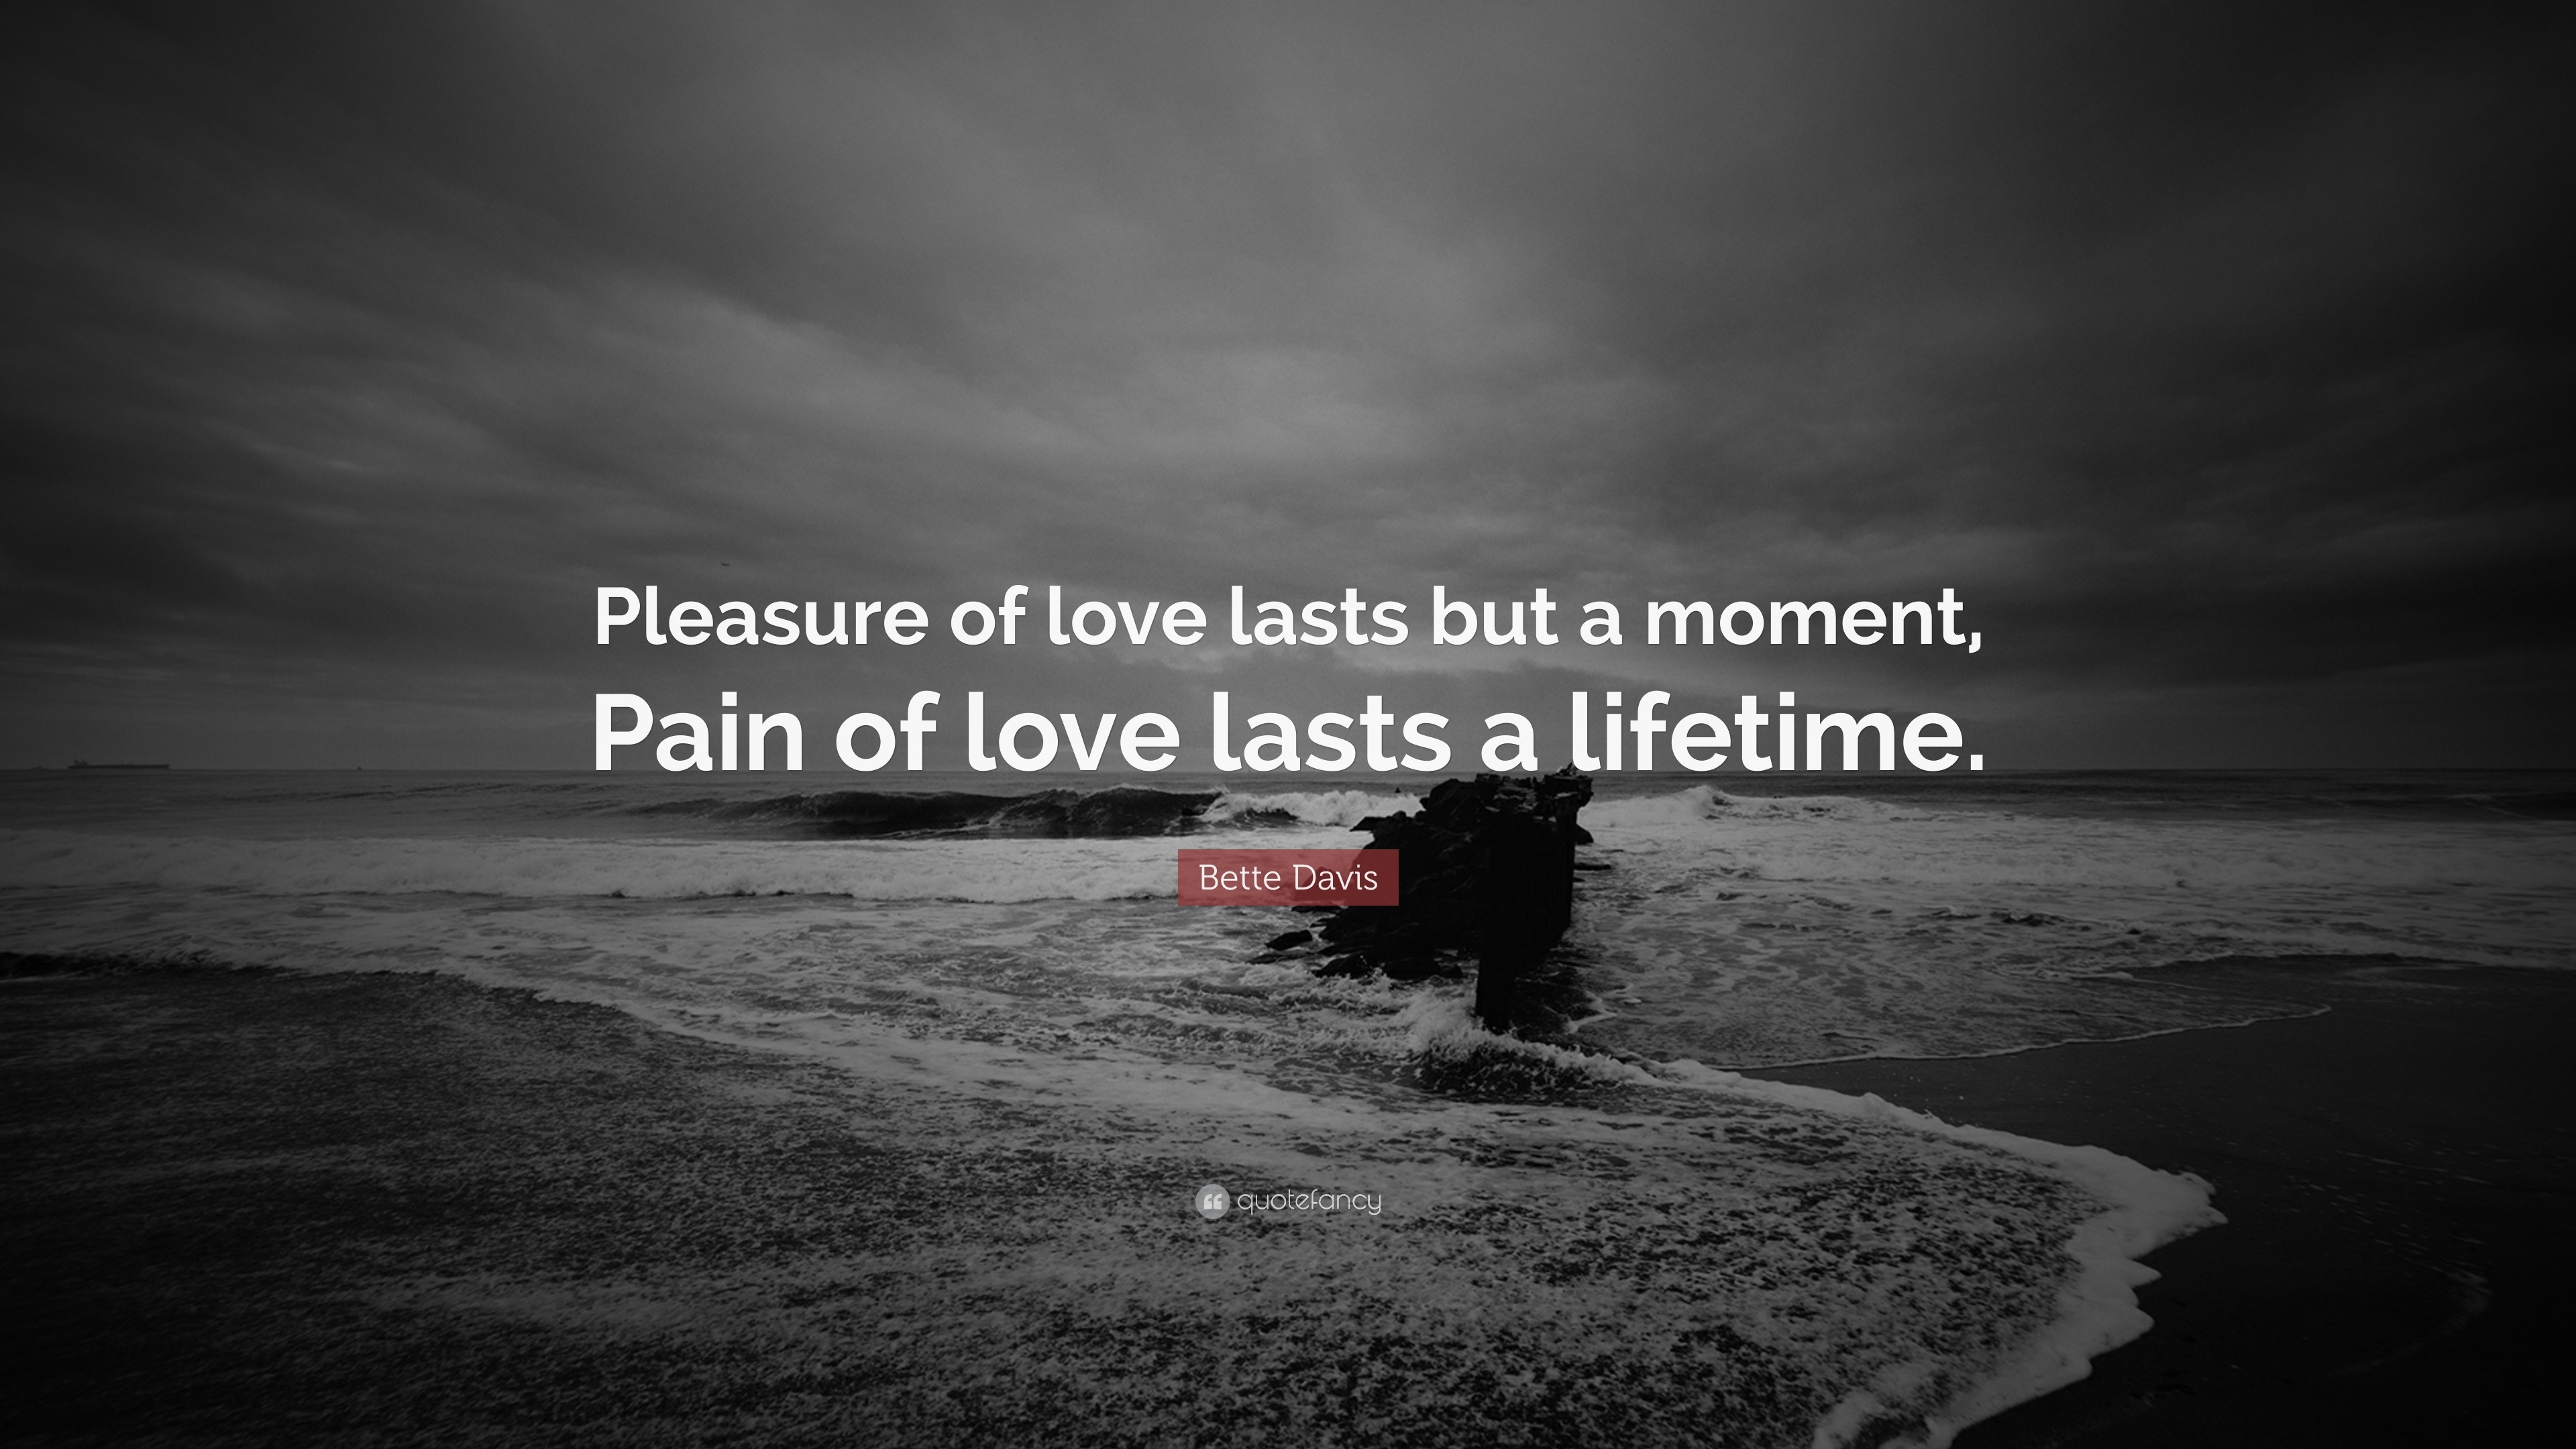 Bette Davis Quote “Pleasure of love lasts but a moment Pain of love